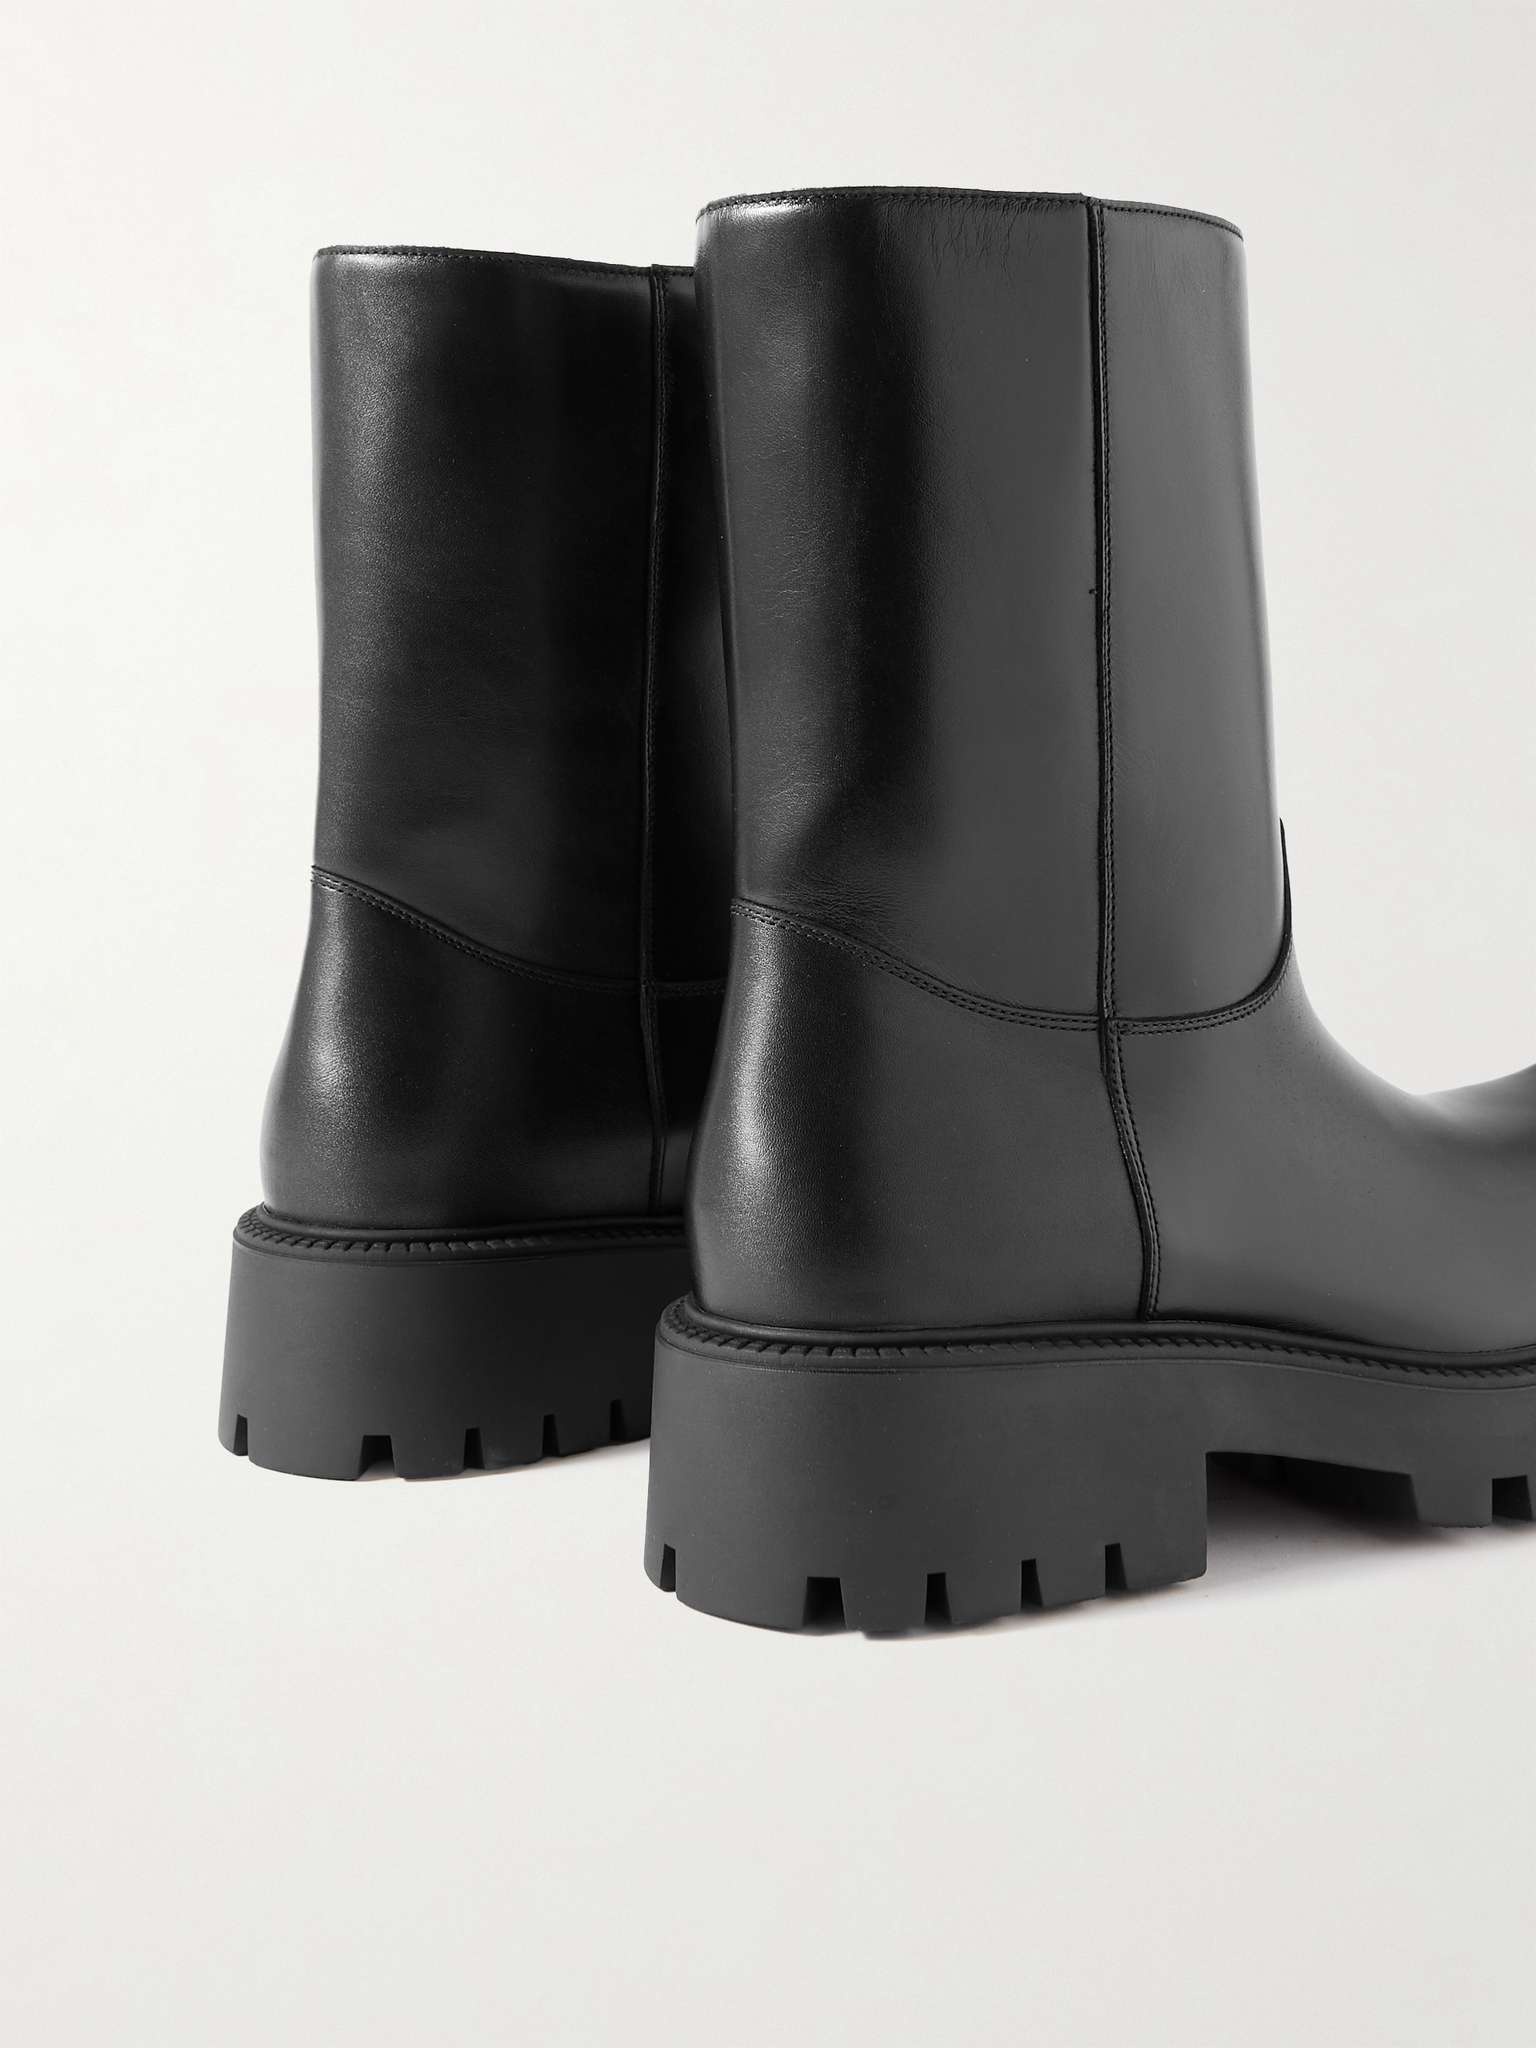 Rhino Leather Boots - 4